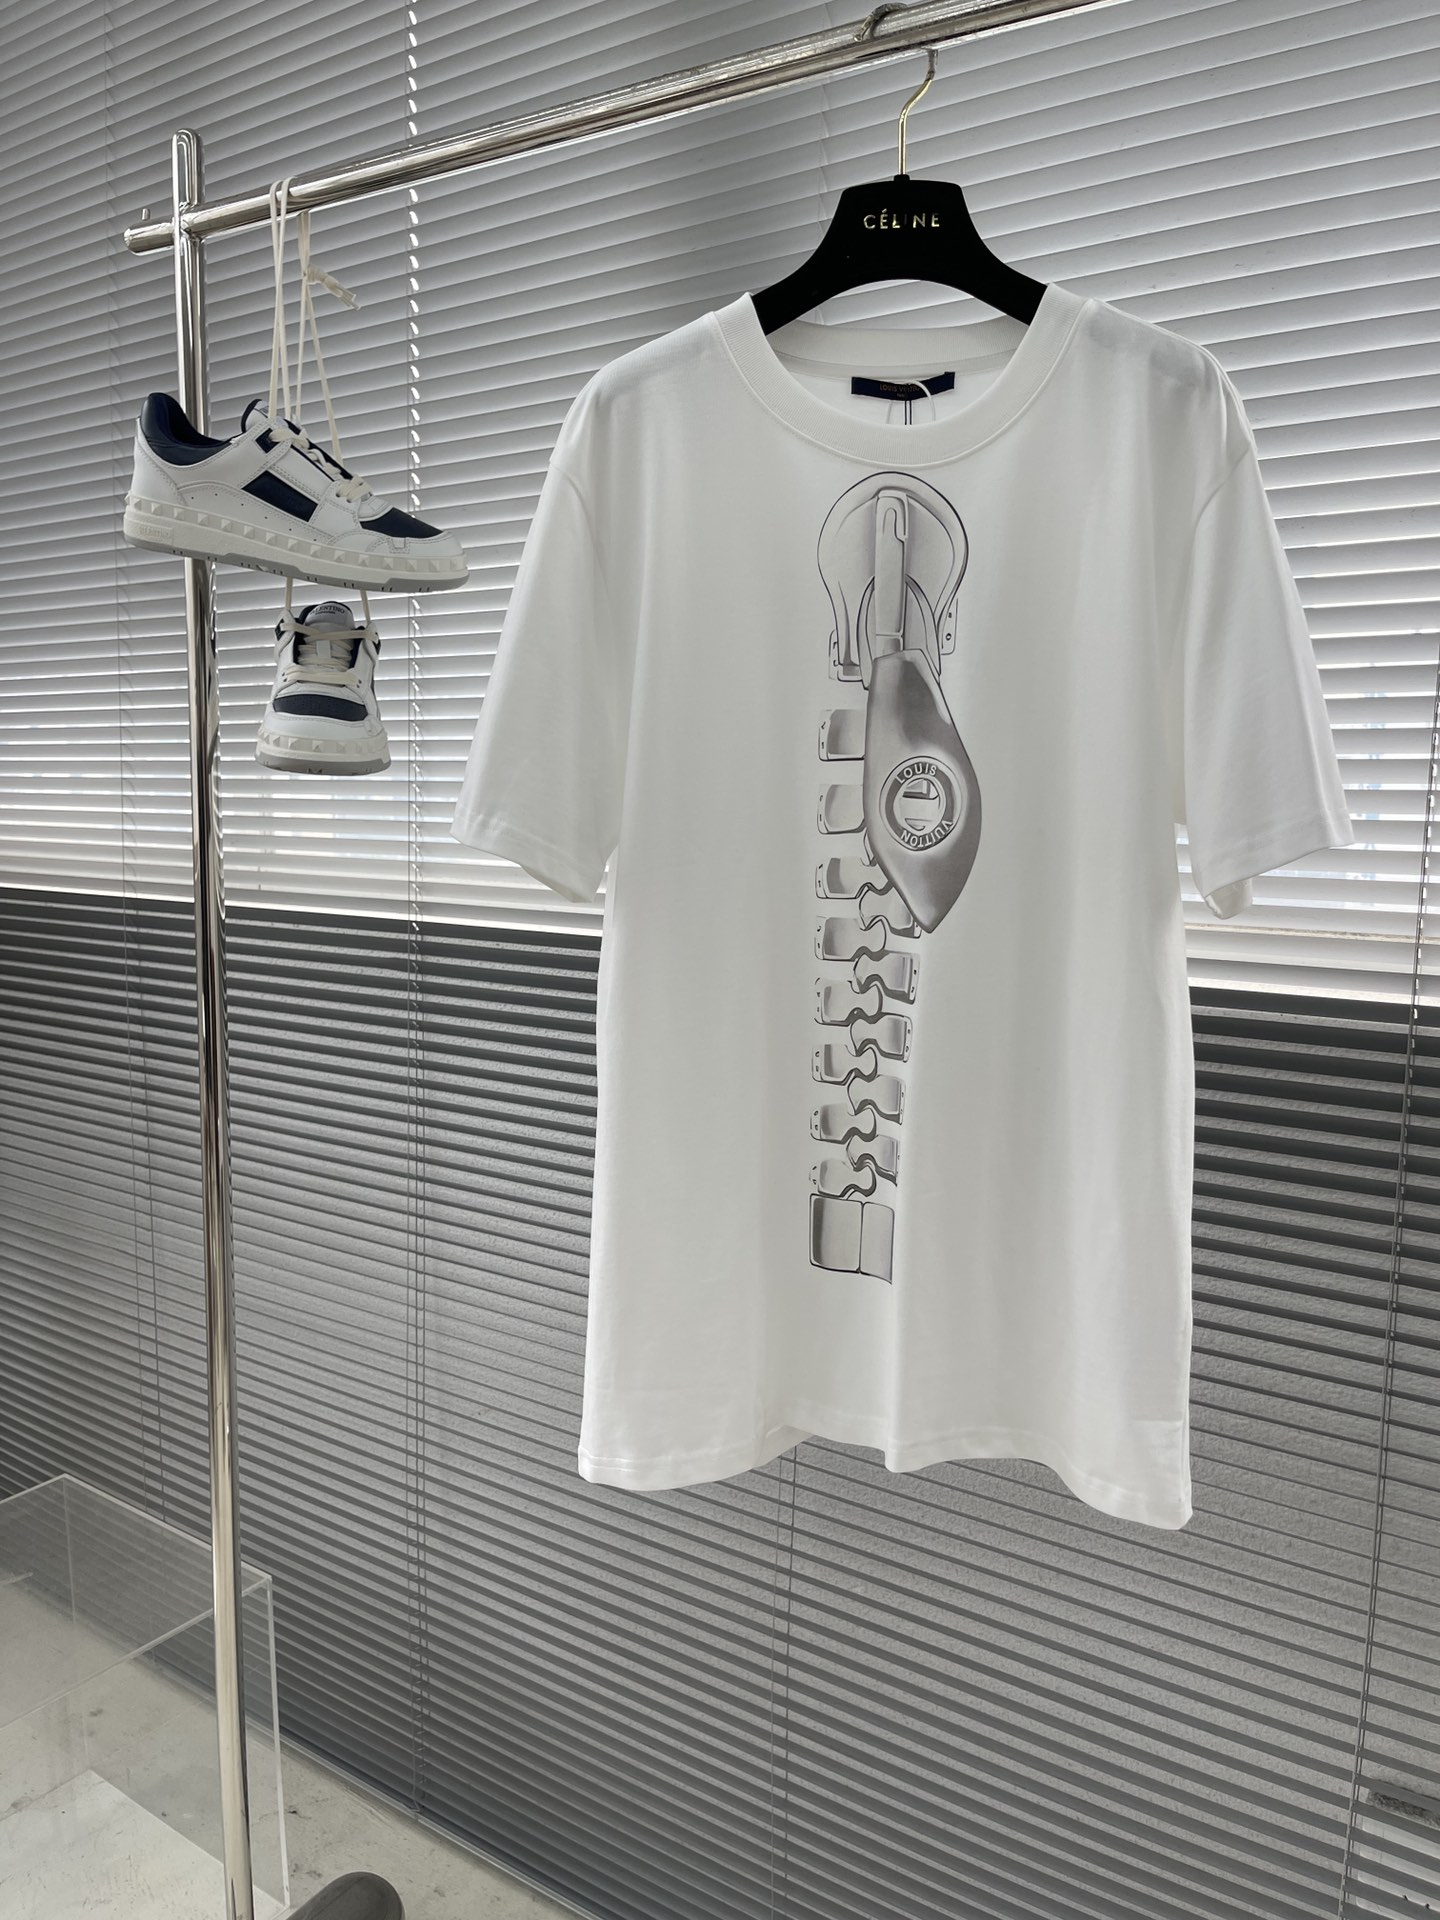 Replica Every Designer
 Louis Vuitton Clothing T-Shirt Buy Cheap
 Doodle Printing Unisex Cotton